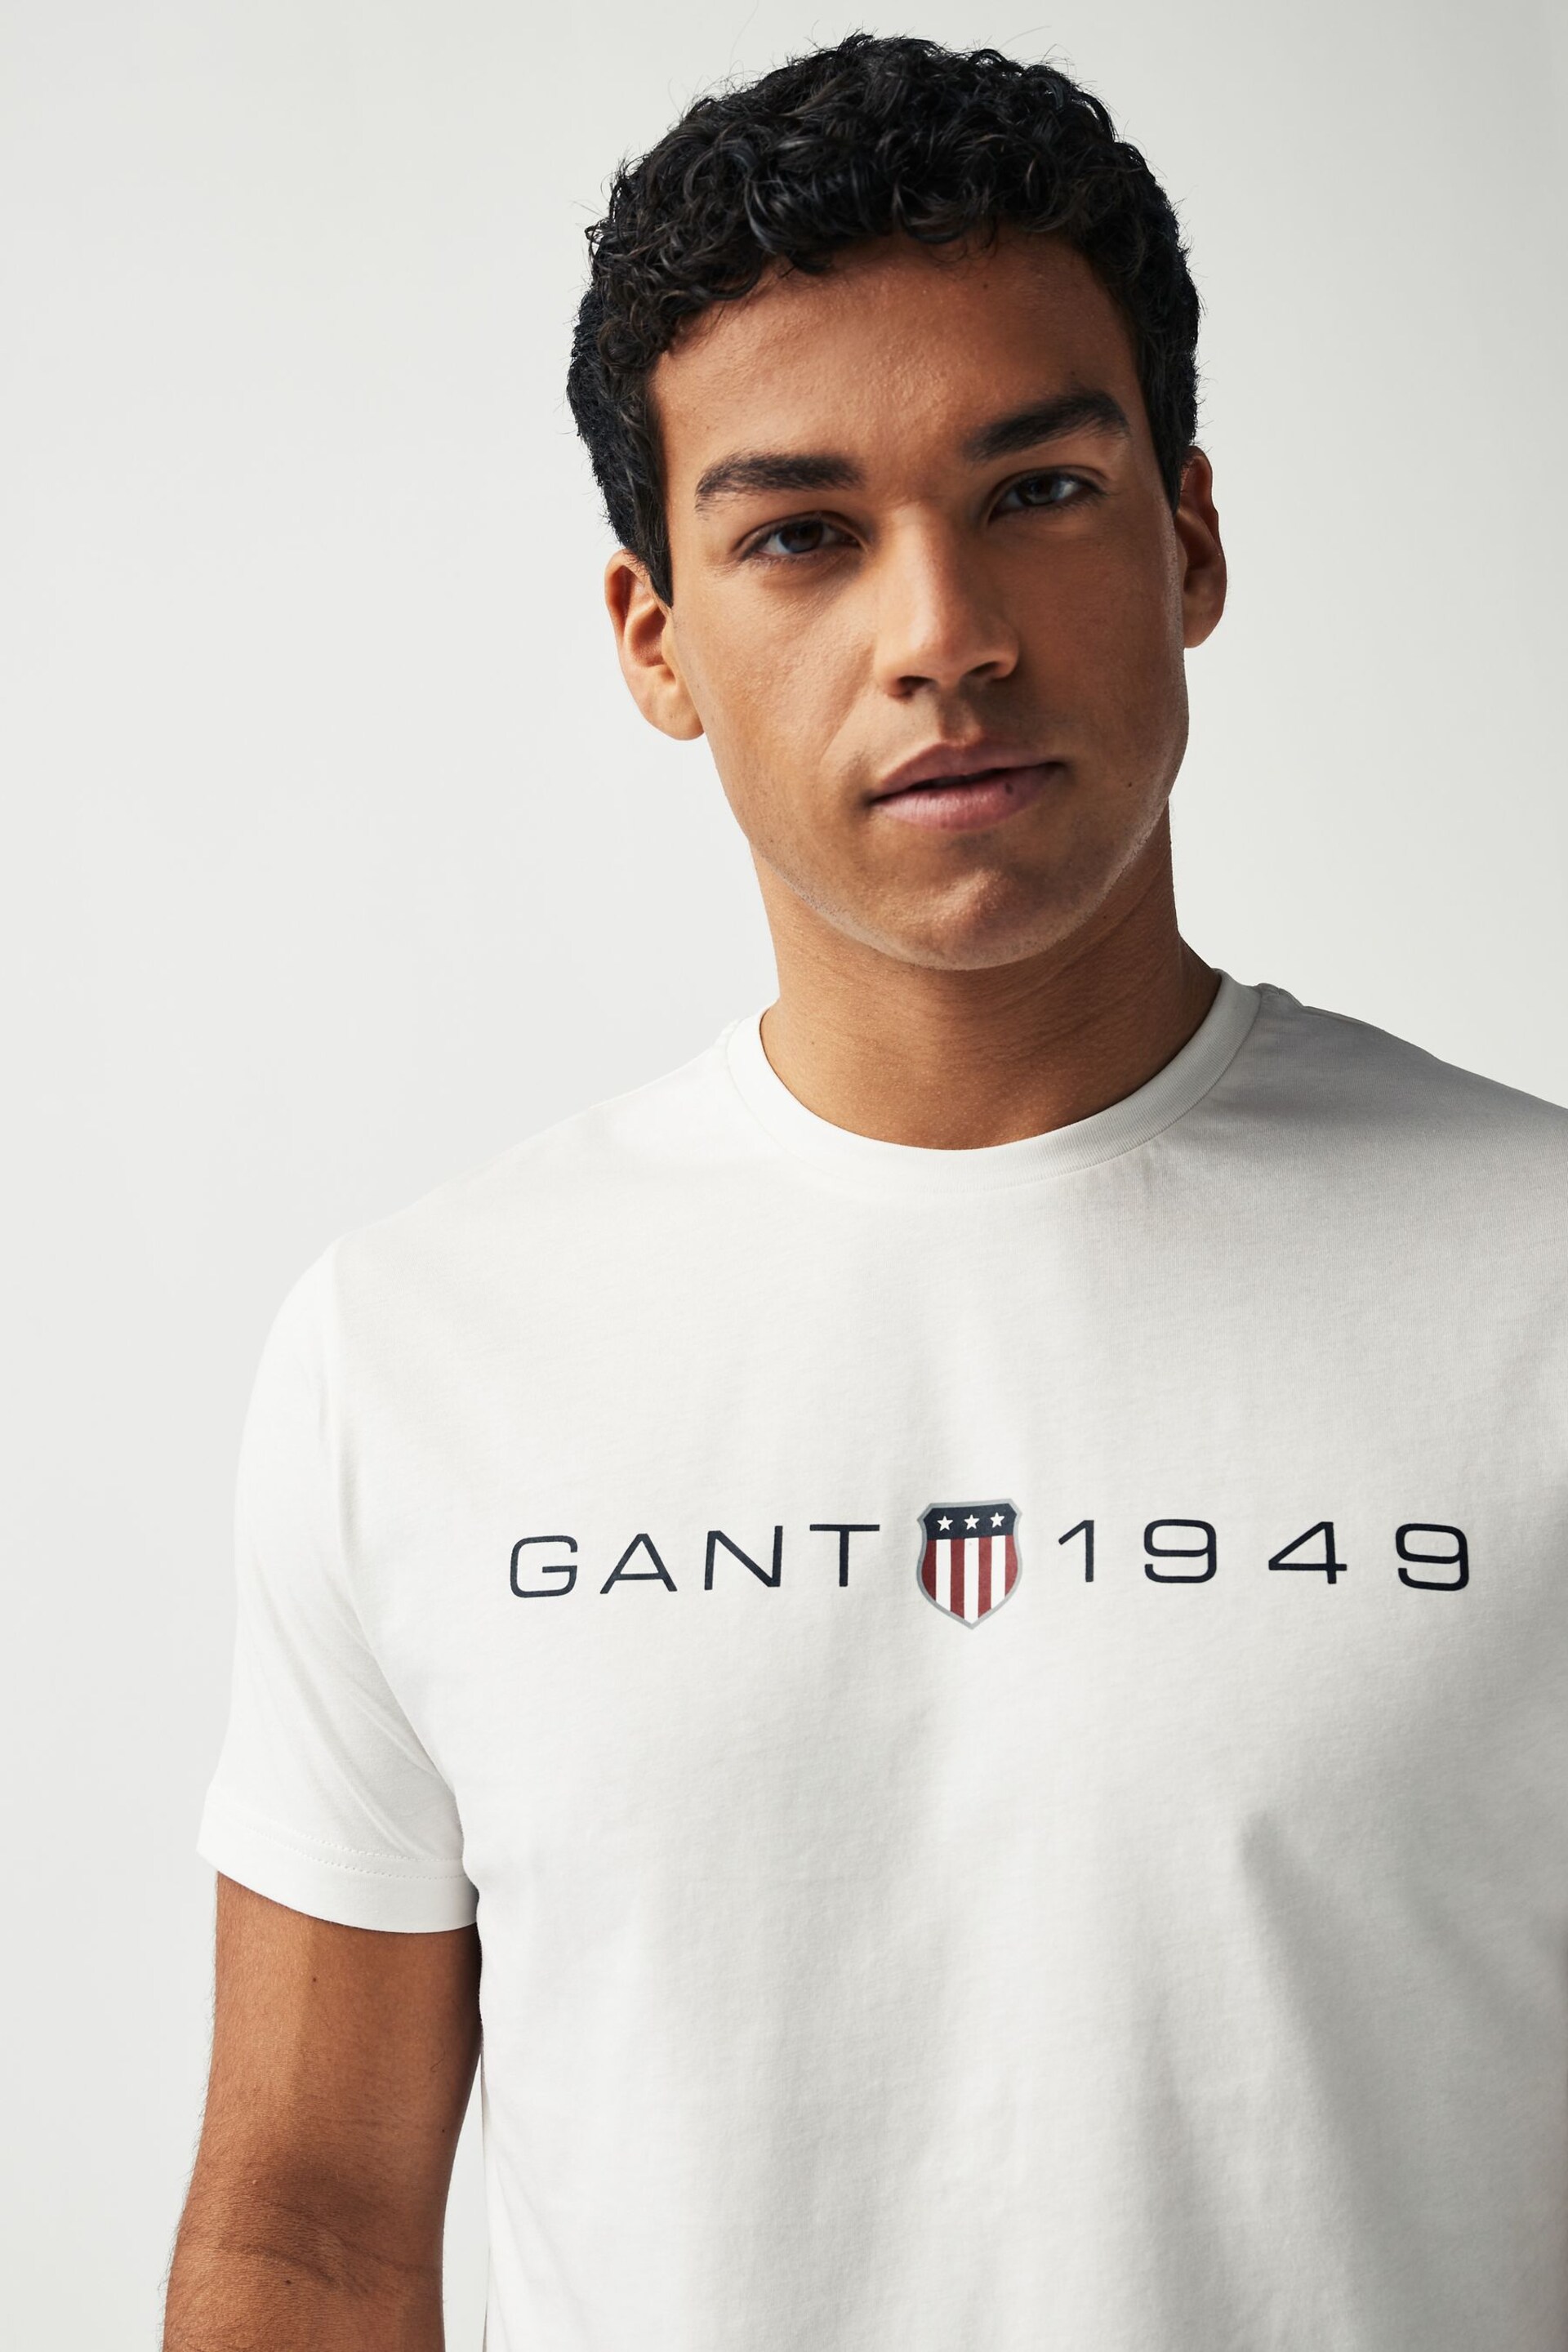 GANT White Printed Graphic T-Shirt - Image 3 of 4